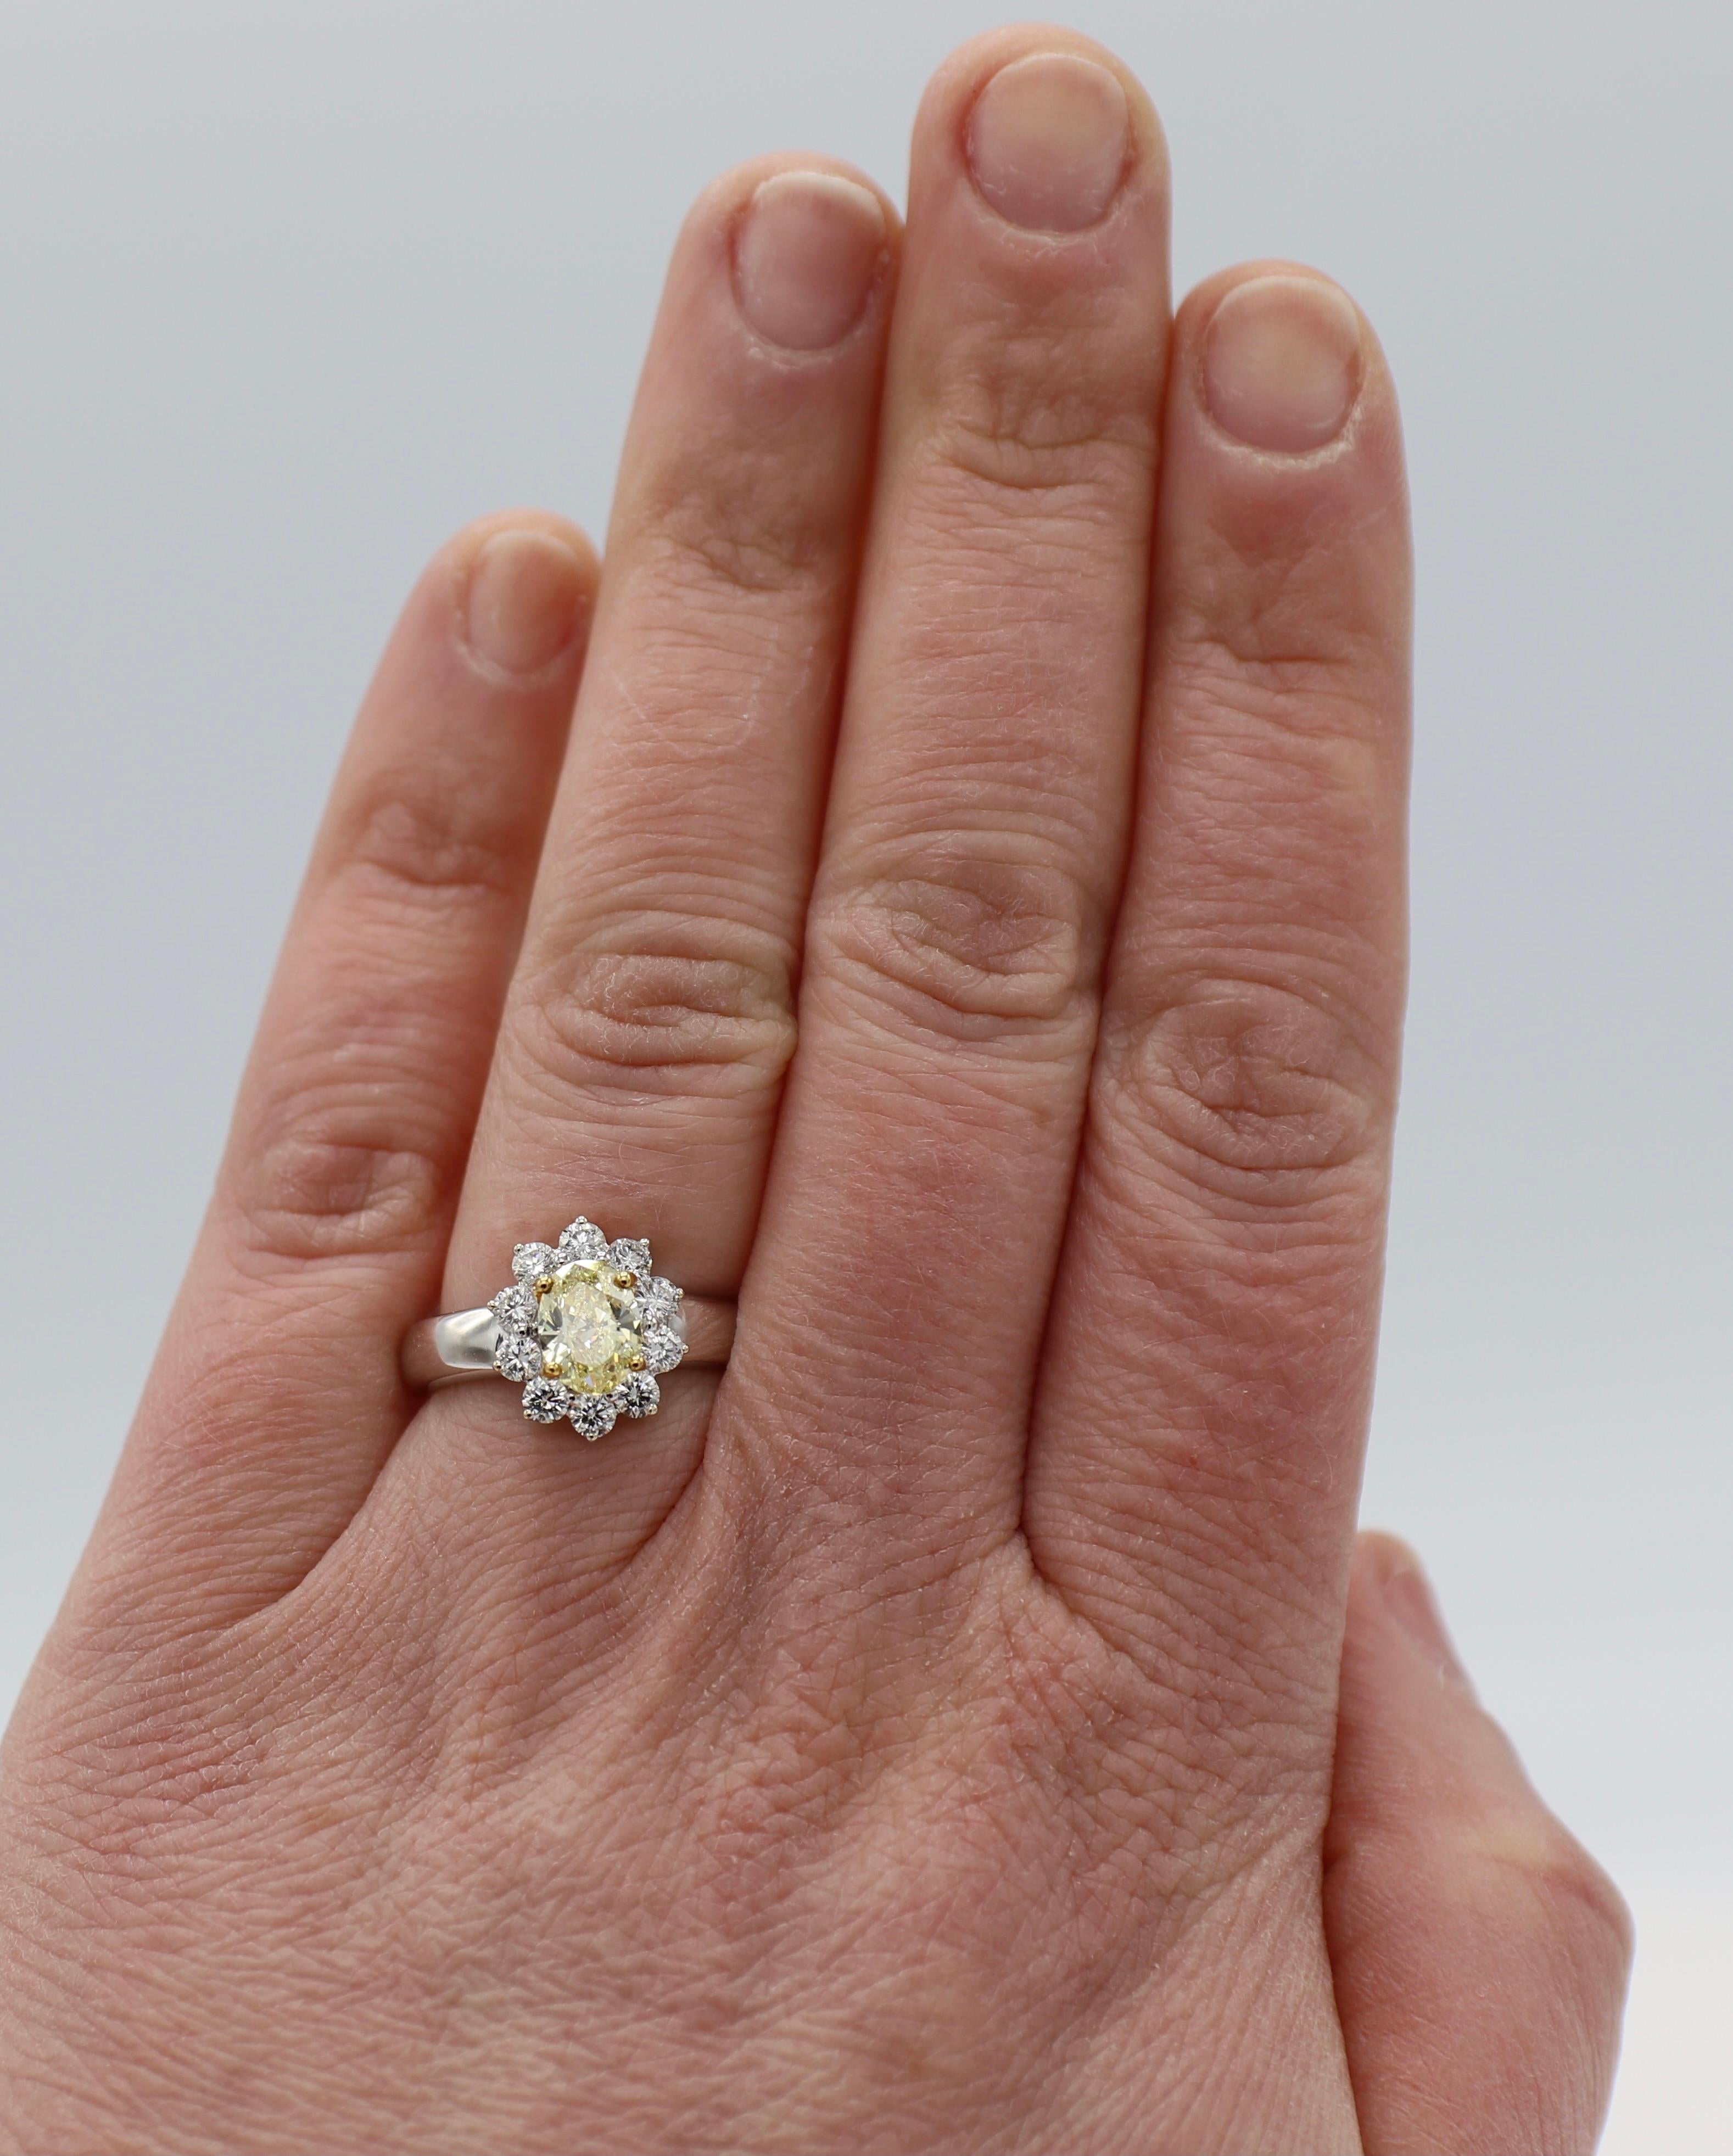 Women's GIA Certified 1.04 Carat Natural Fancy Intense Yellow Oval Diamond Ring